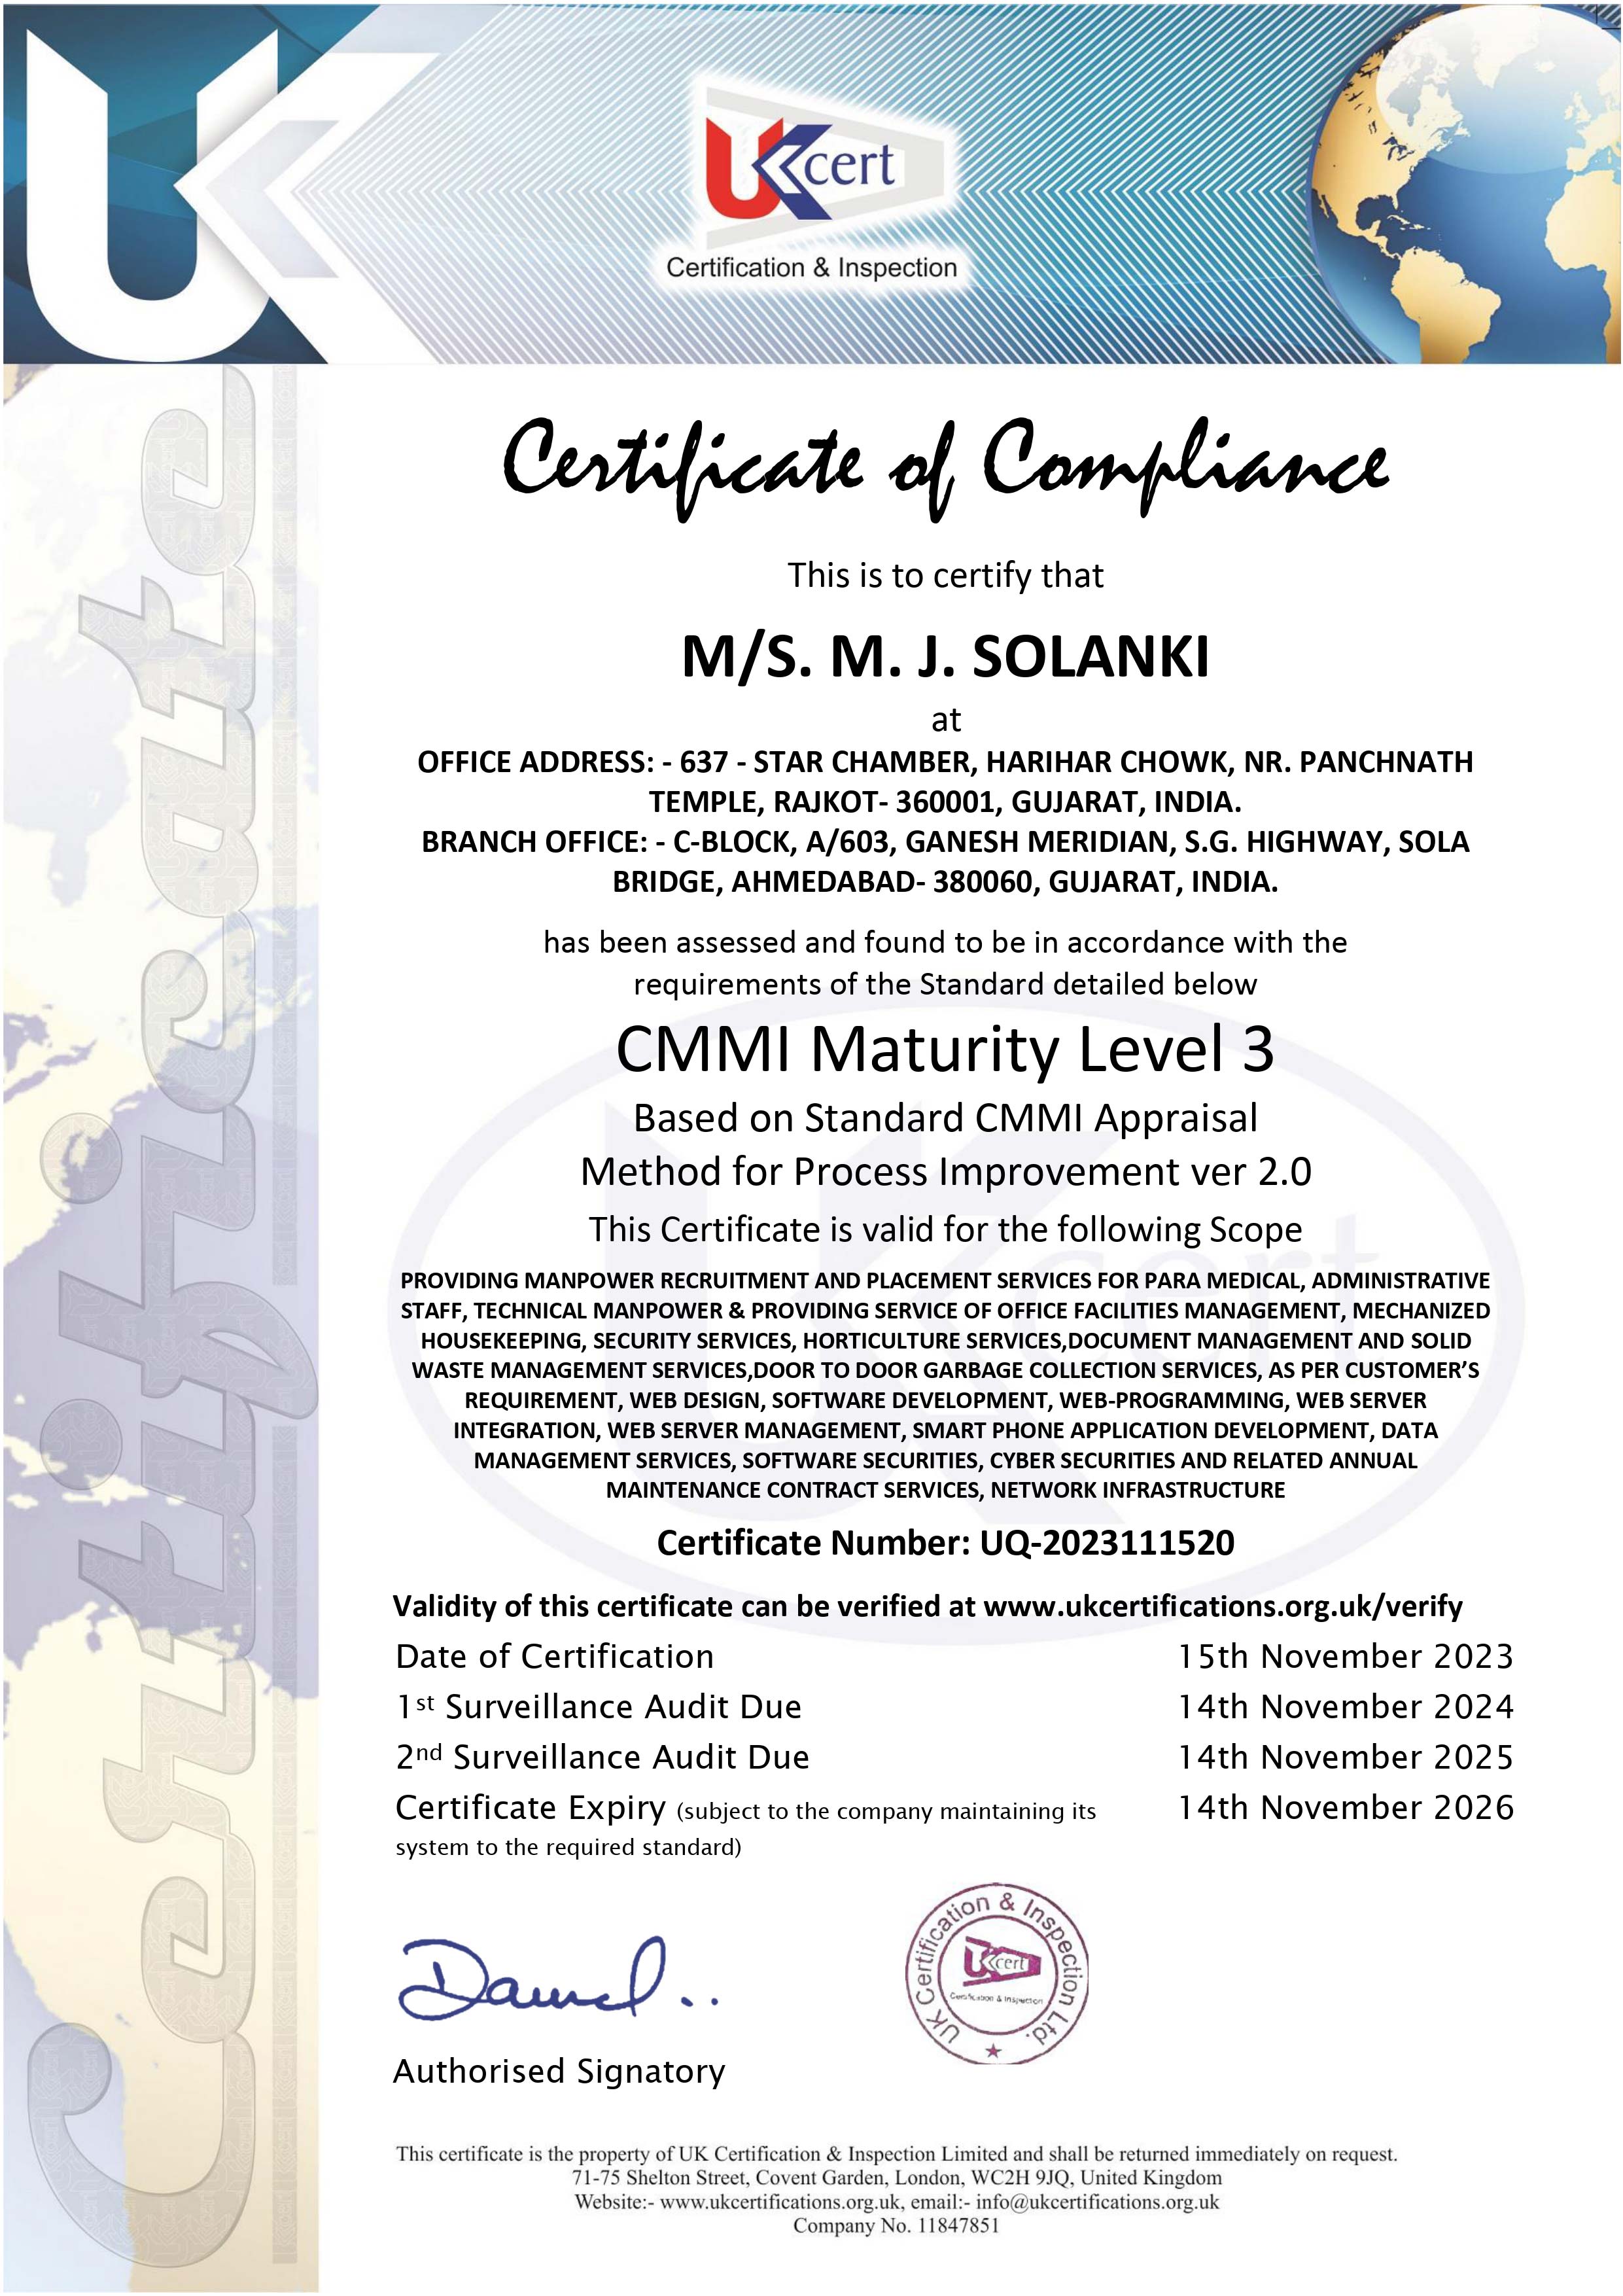 ertificate of Compliance CMMI Maturity Level-3 Image